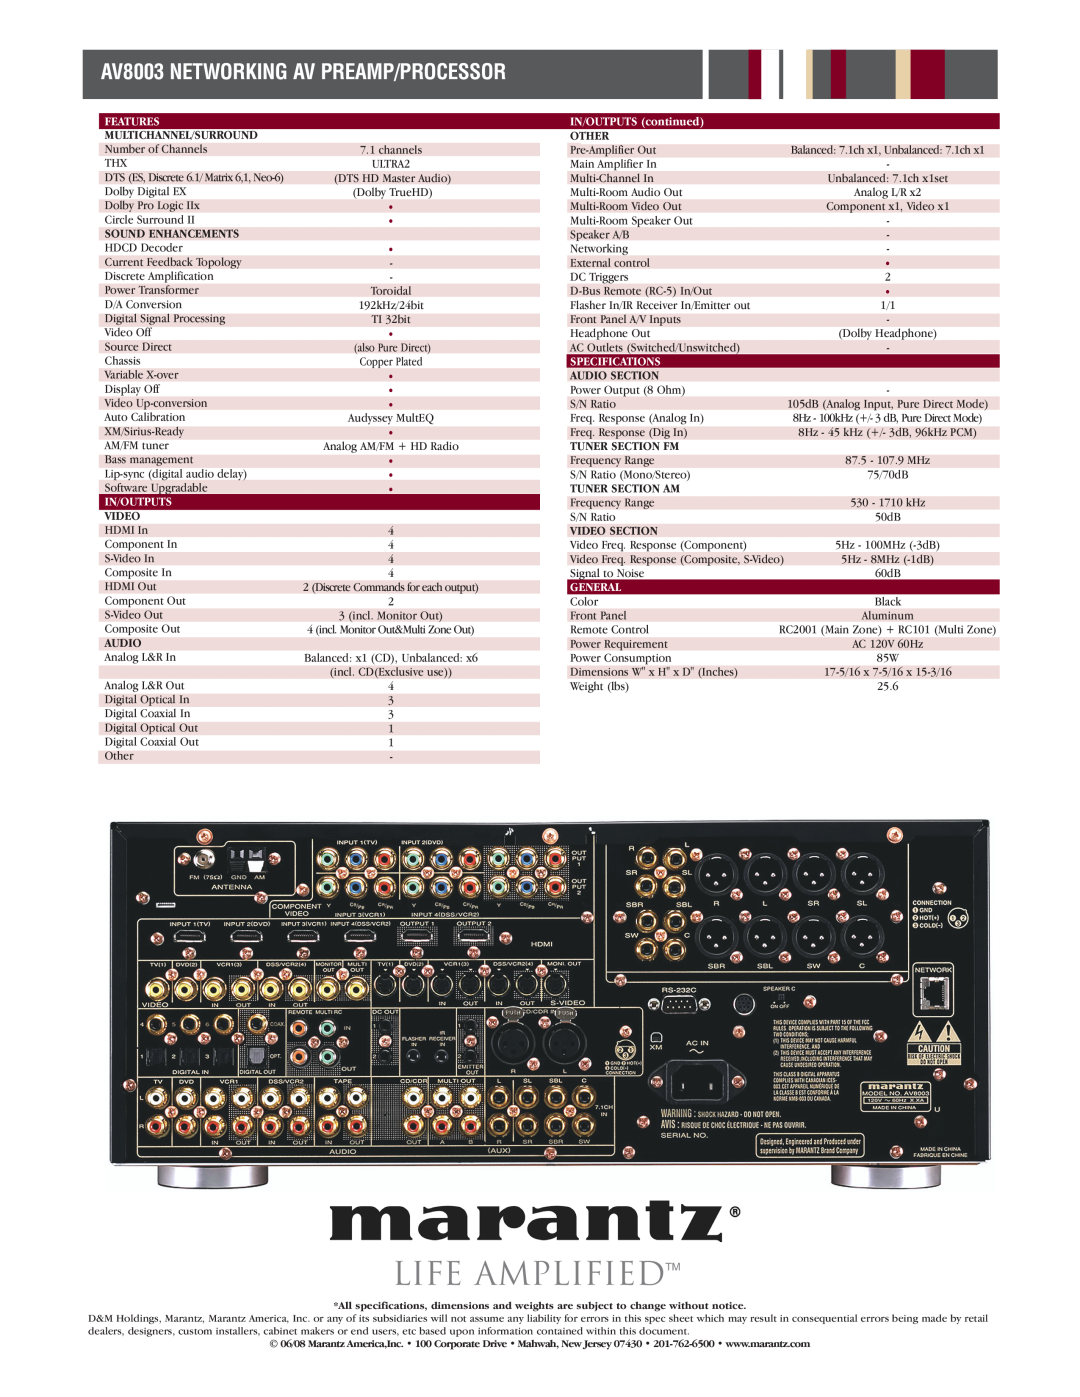 Marantz AV8003 NETWORKING AV PREAMP/PROCESSOR, Life Amplifiedtm, Sound Enhancements, In/Outputs, Video, Audio, Other 